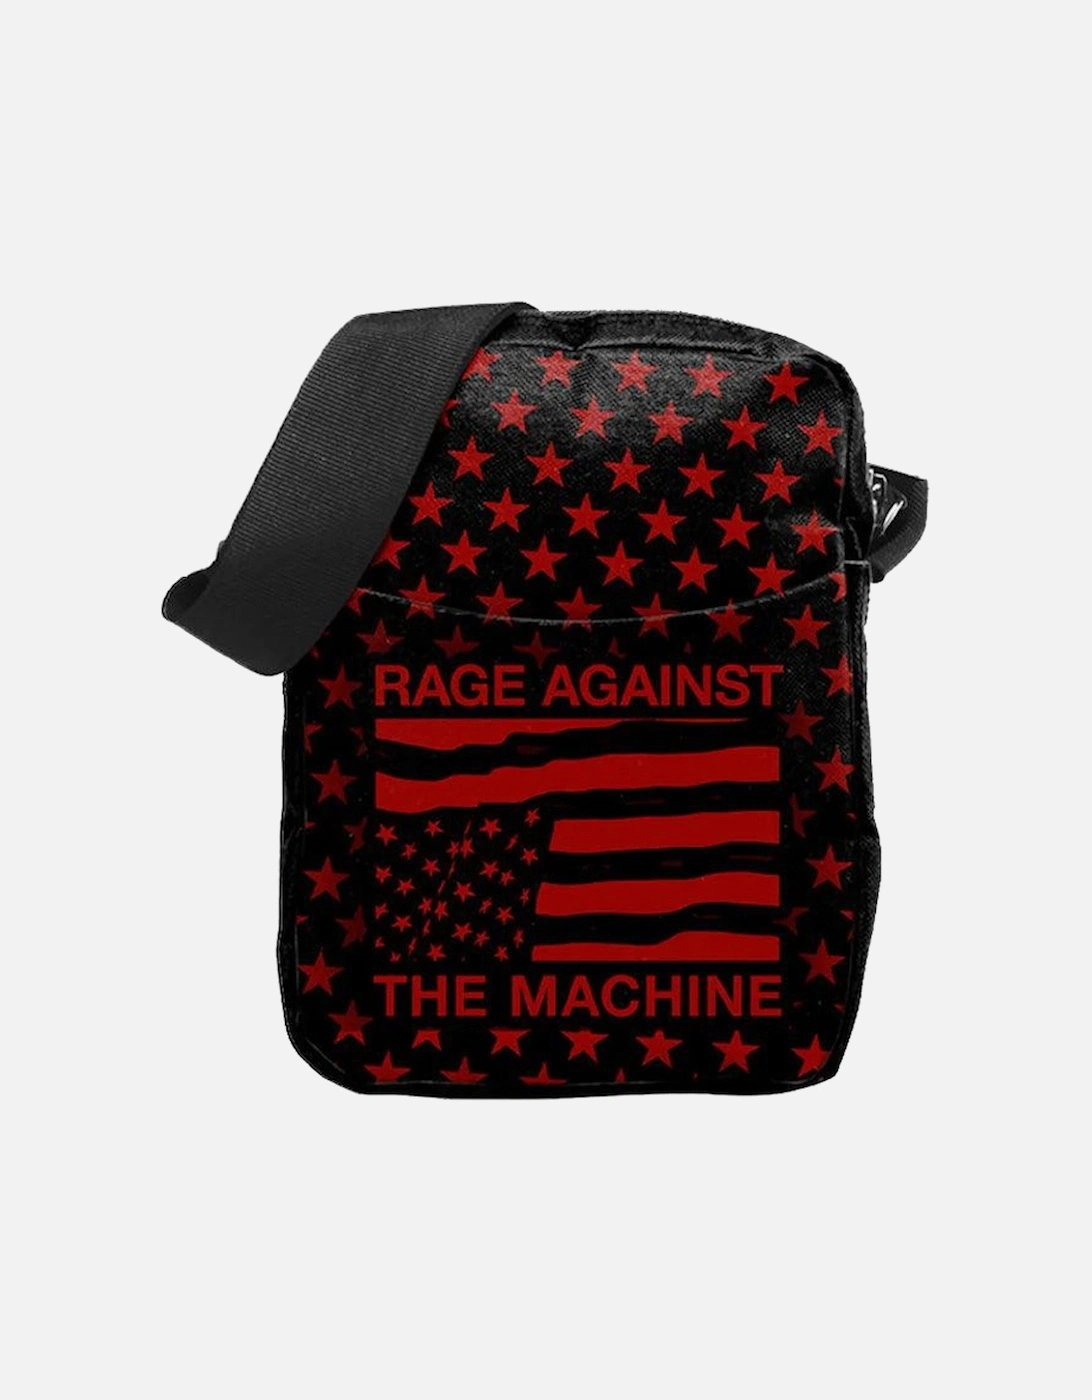 USA Stars Rage Against the Machine Crossbody Bag, 2 of 1